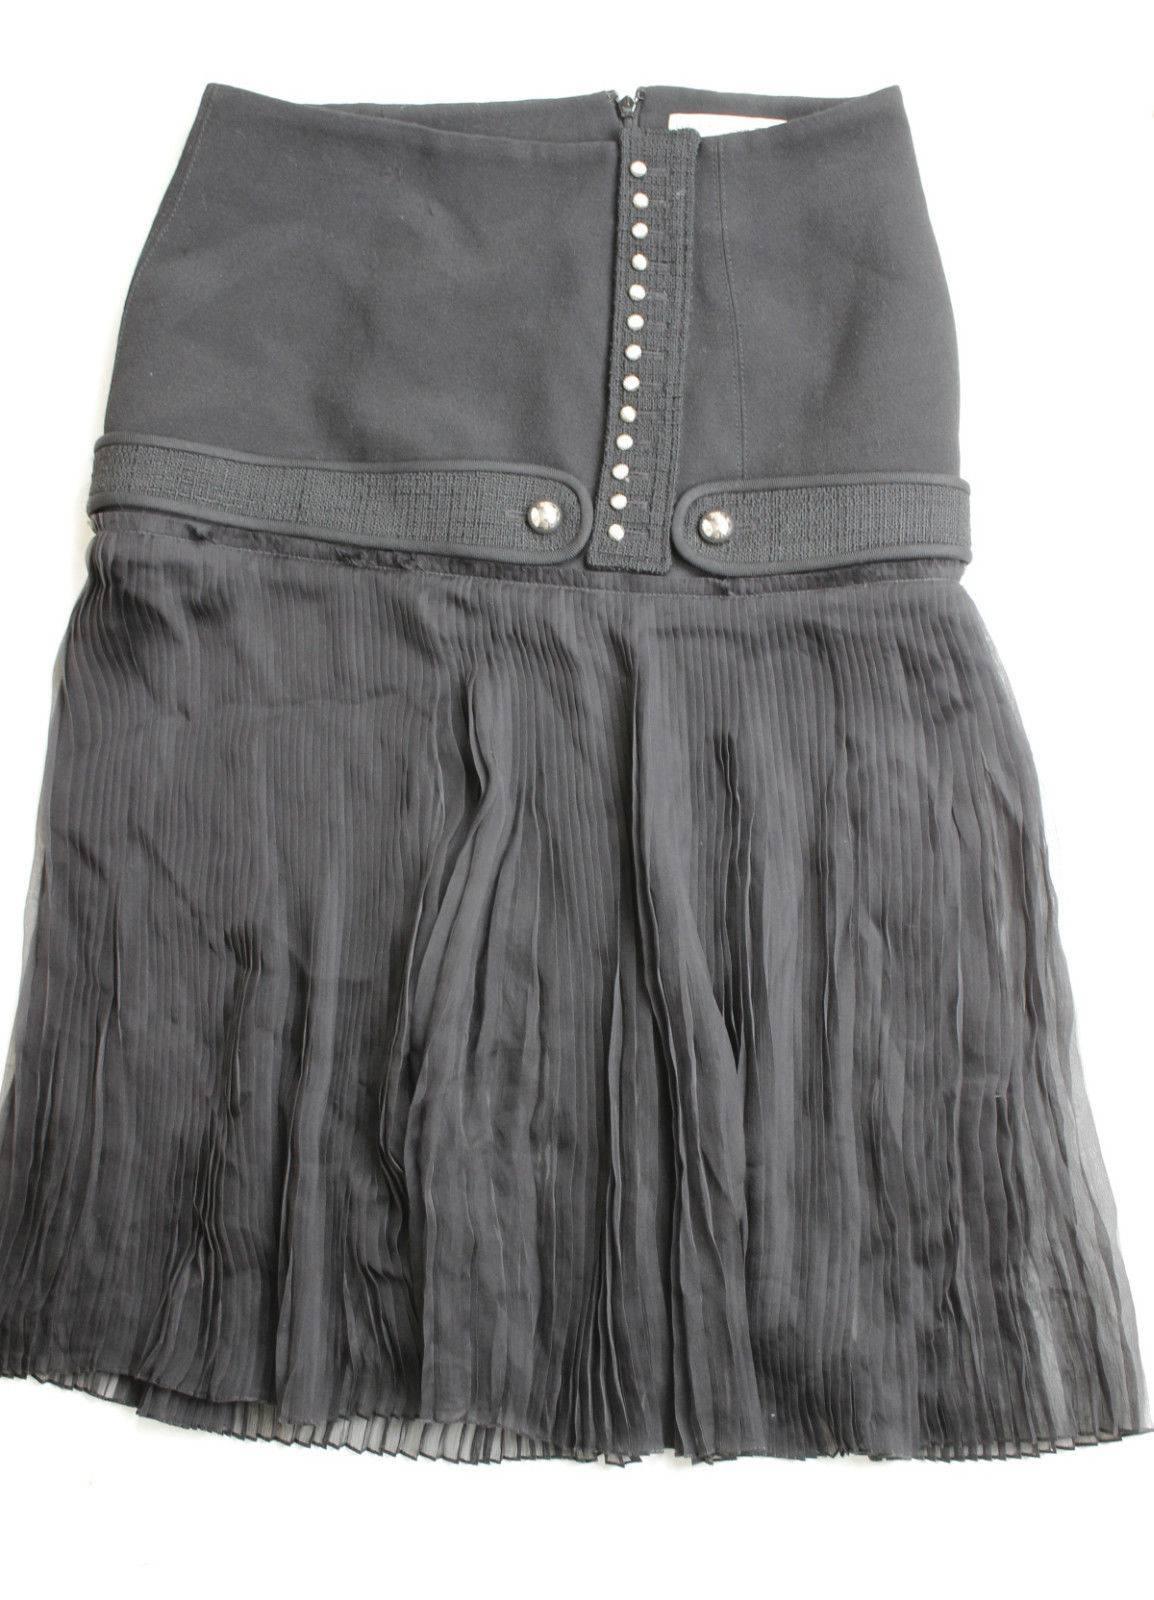 Balenciaga Paris Black Pleated sheer Nicolas Ghesquière catwalk skirt 36 UK 6 For Sale 1